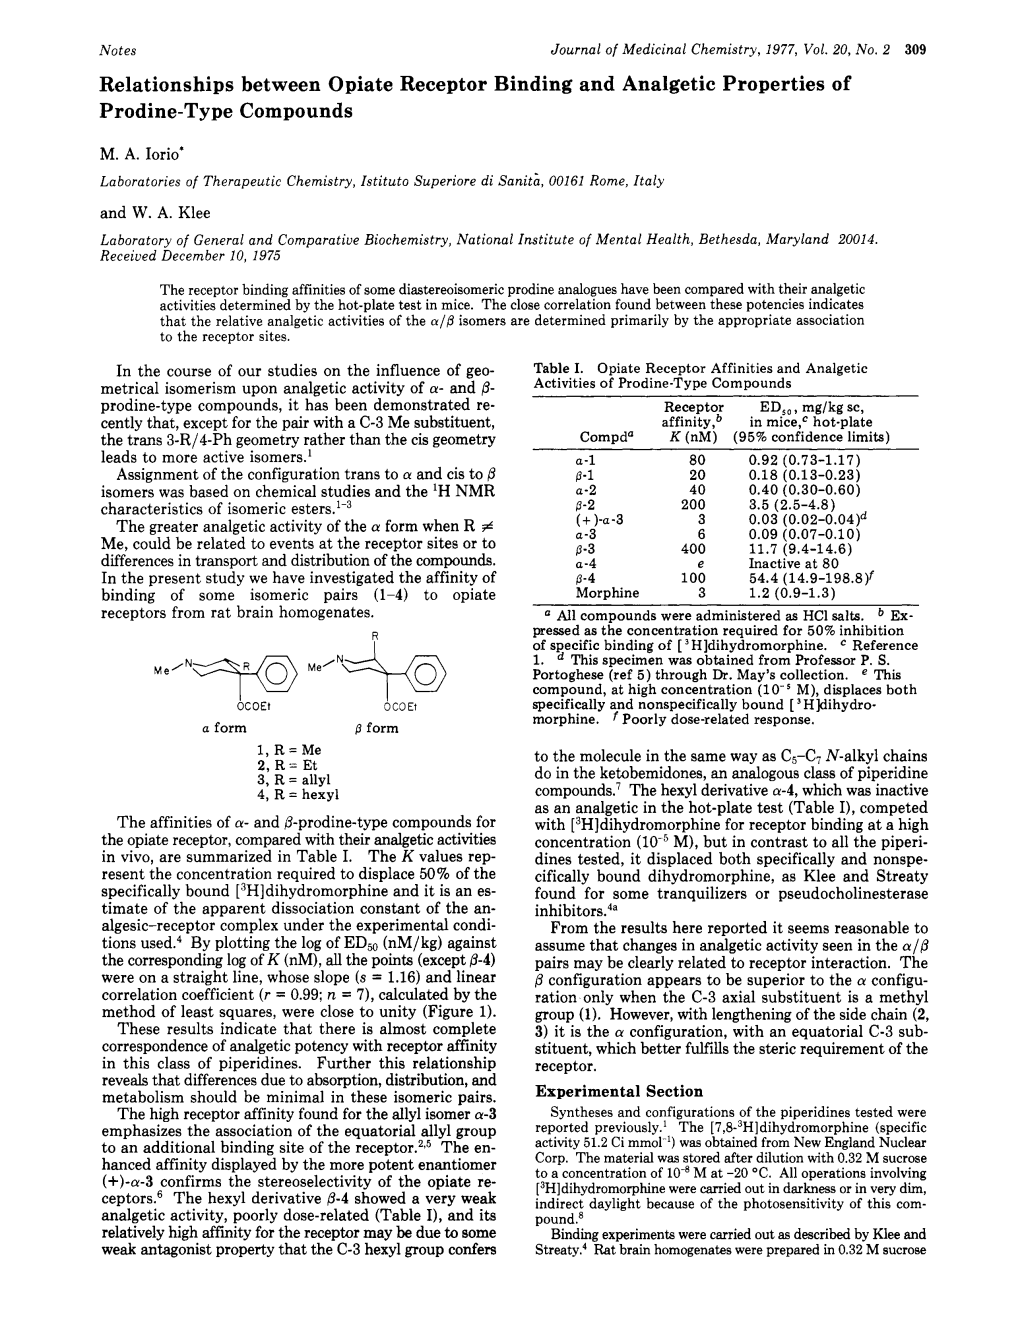 Relationships Between Opiate Receptor Binding and Analgetic Properties of Prodine-Type Compounds